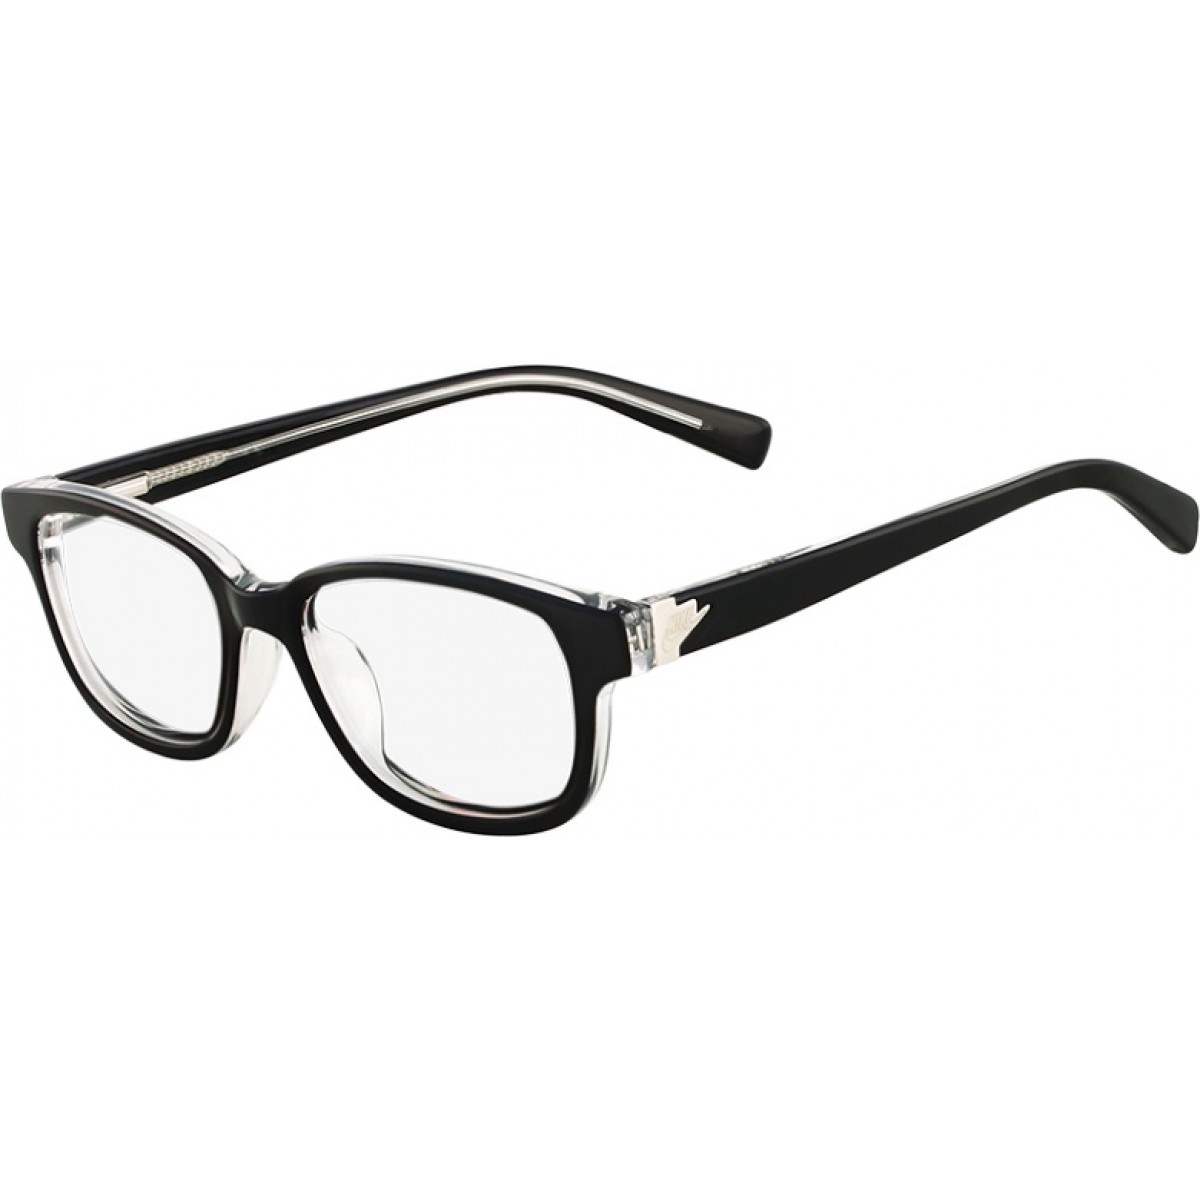 clipart eyeglasses - photo #40